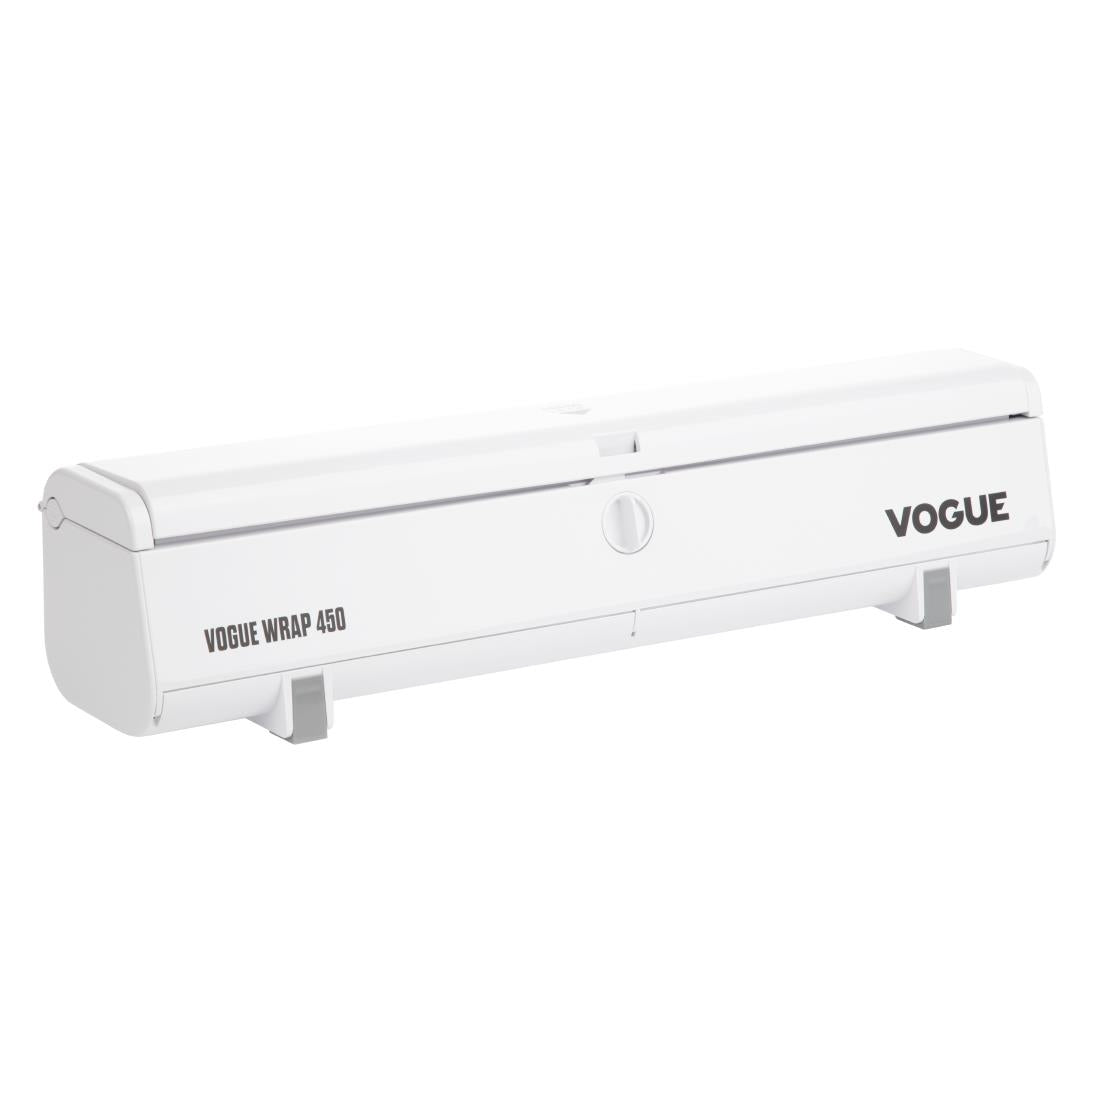 CW202 Vogue Wrap450 Cling Film, Foil and Baking Parchment Dispenser JD Catering Equipment Solutions Ltd